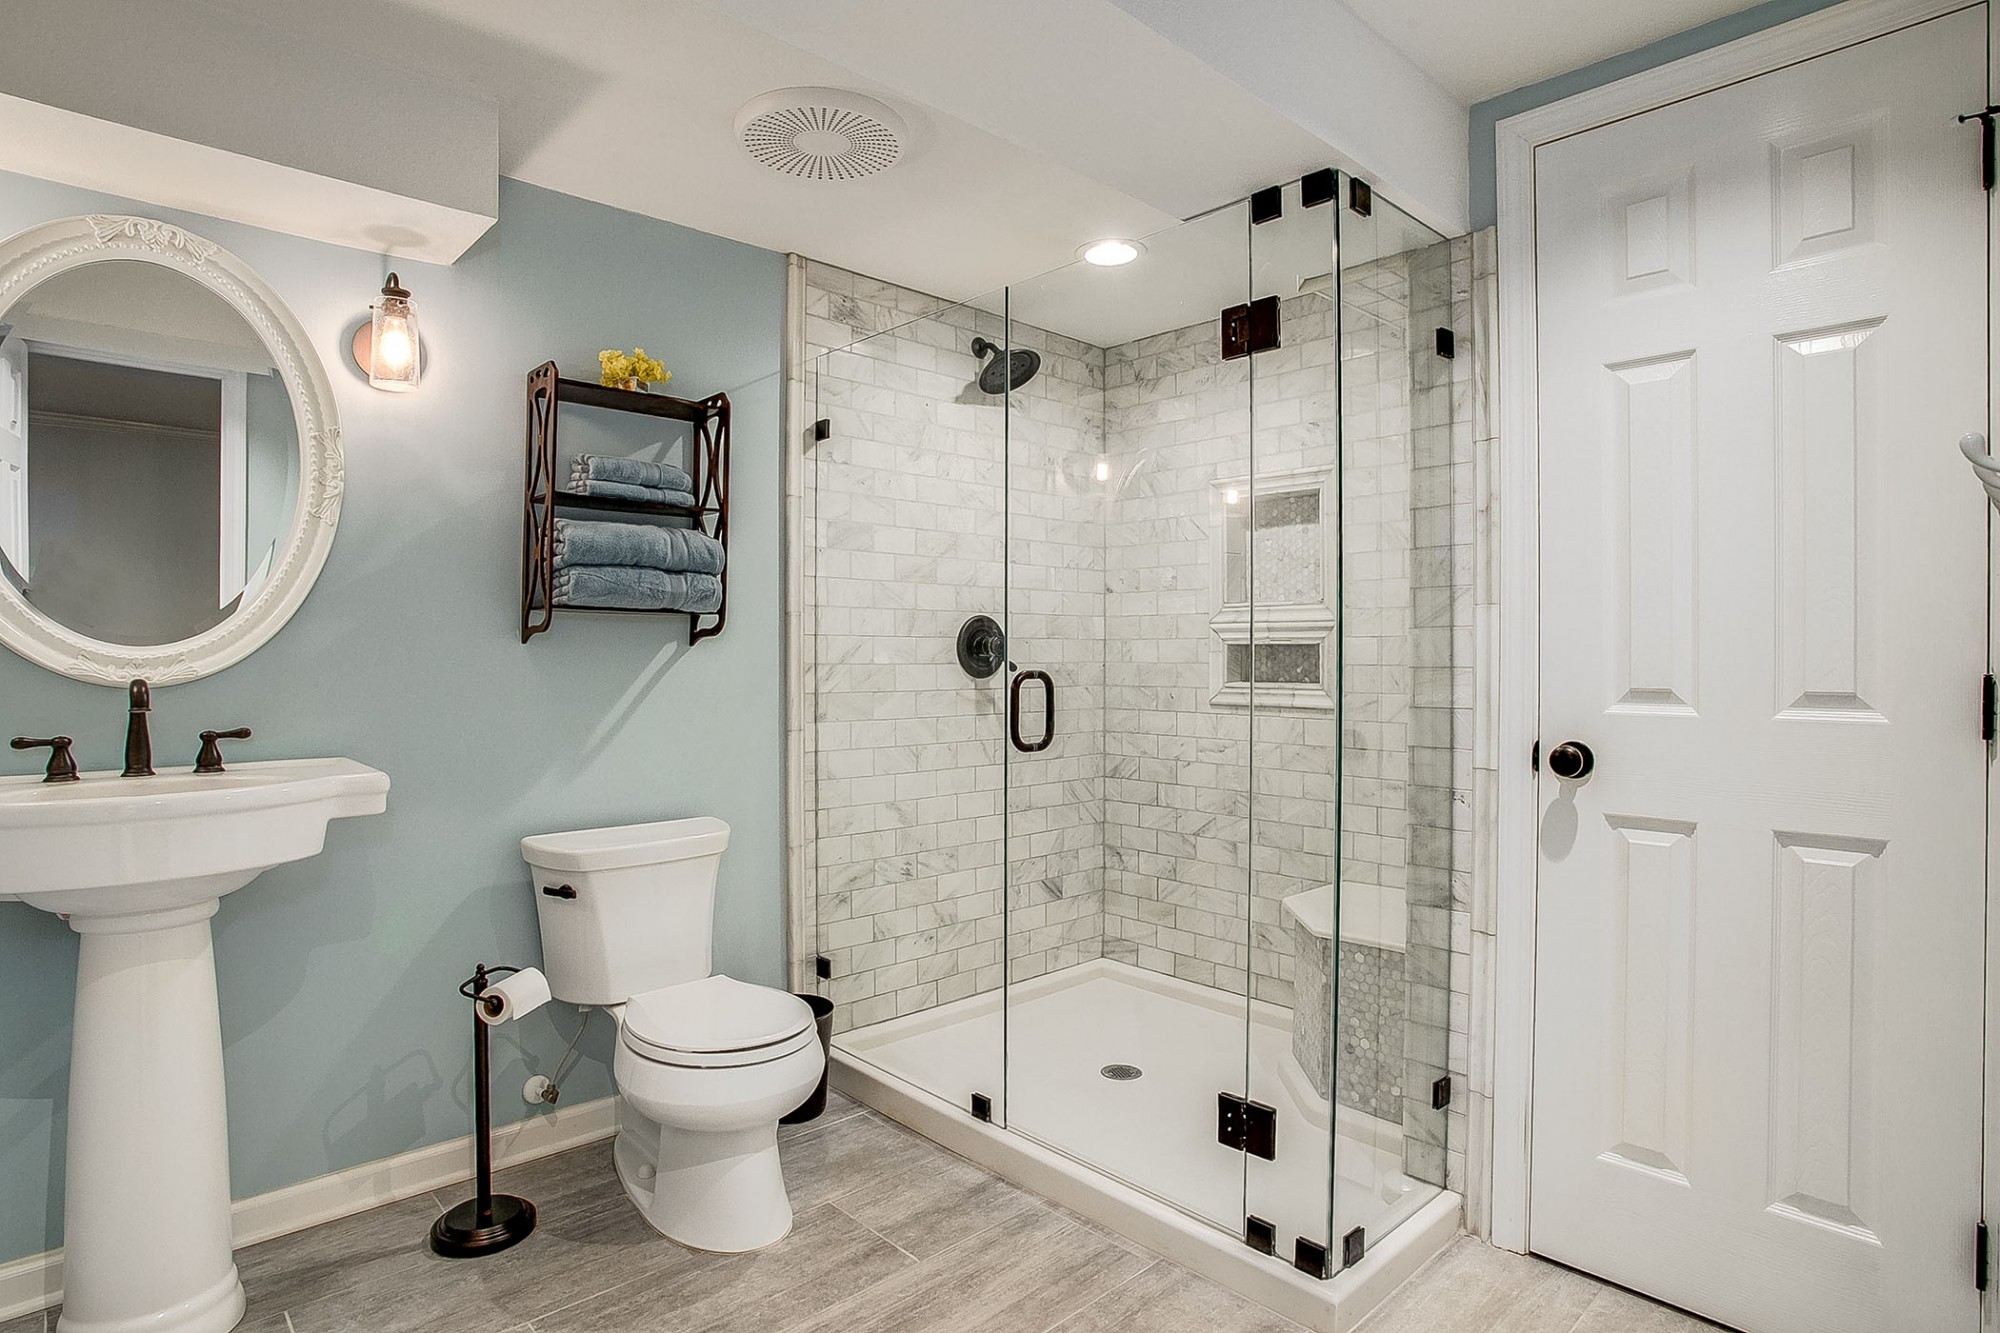 Gorgeous third full bath highlighting a stunning frameless glass and tile walk-in shower.